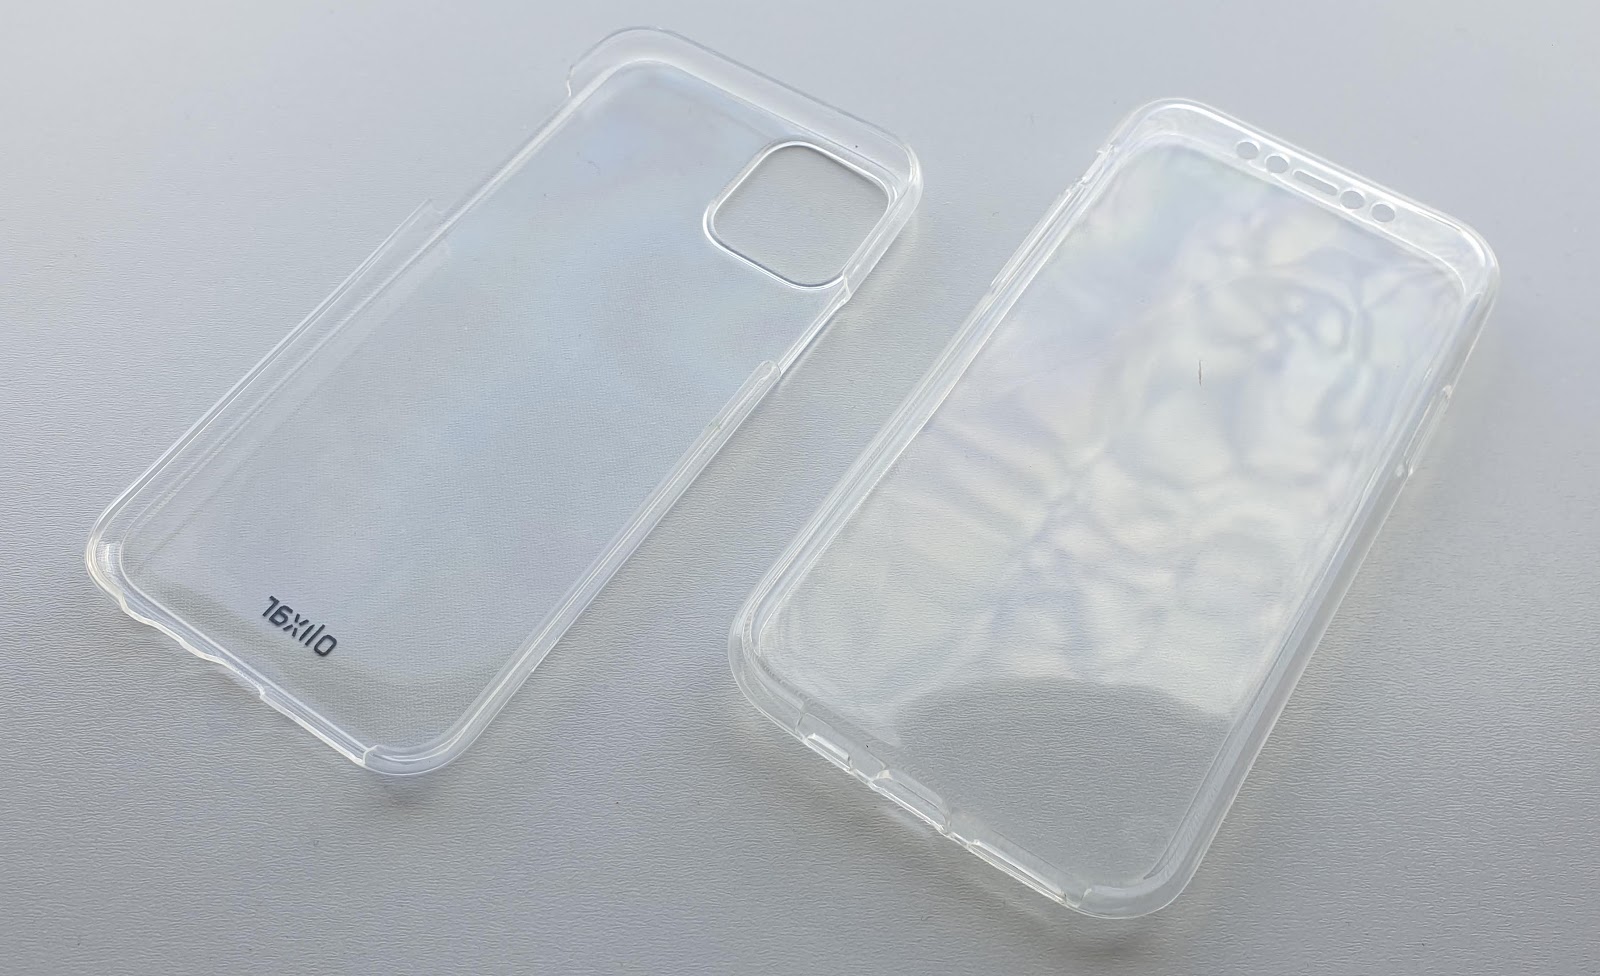 Olixar Soft Silicone iPhone 11 Pro Max Case - Lilac - Mobile Fun